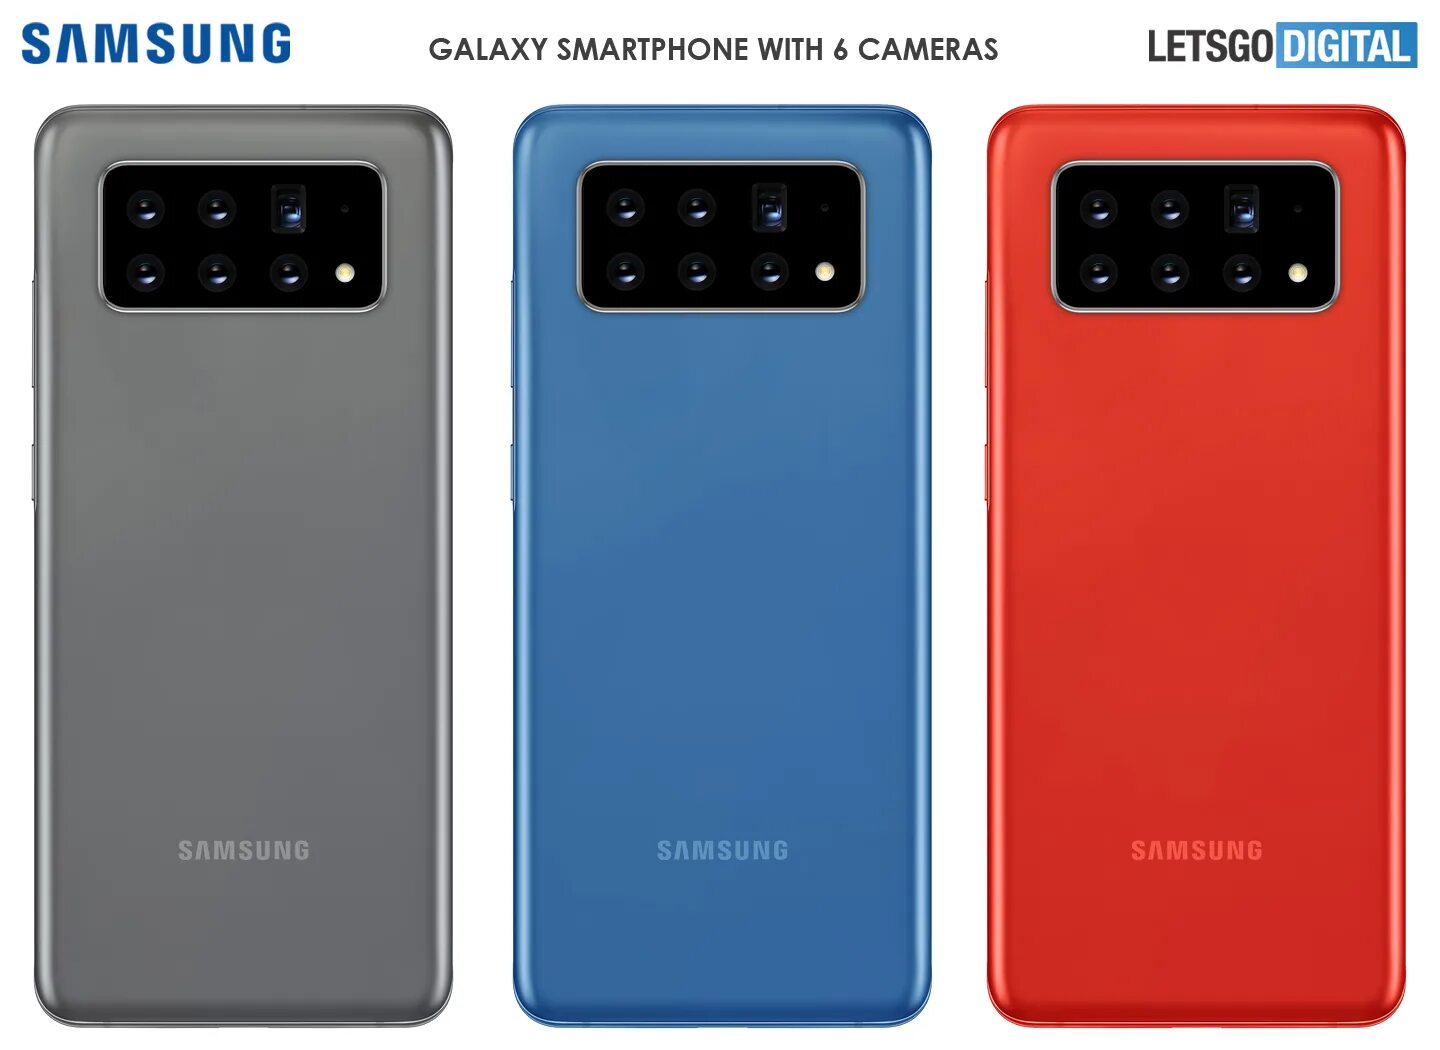 Samsung 5 камер. Новый самсунг 6 камер. Samsung 5 камер телефон. Самсунг галакси с 5 камерами.